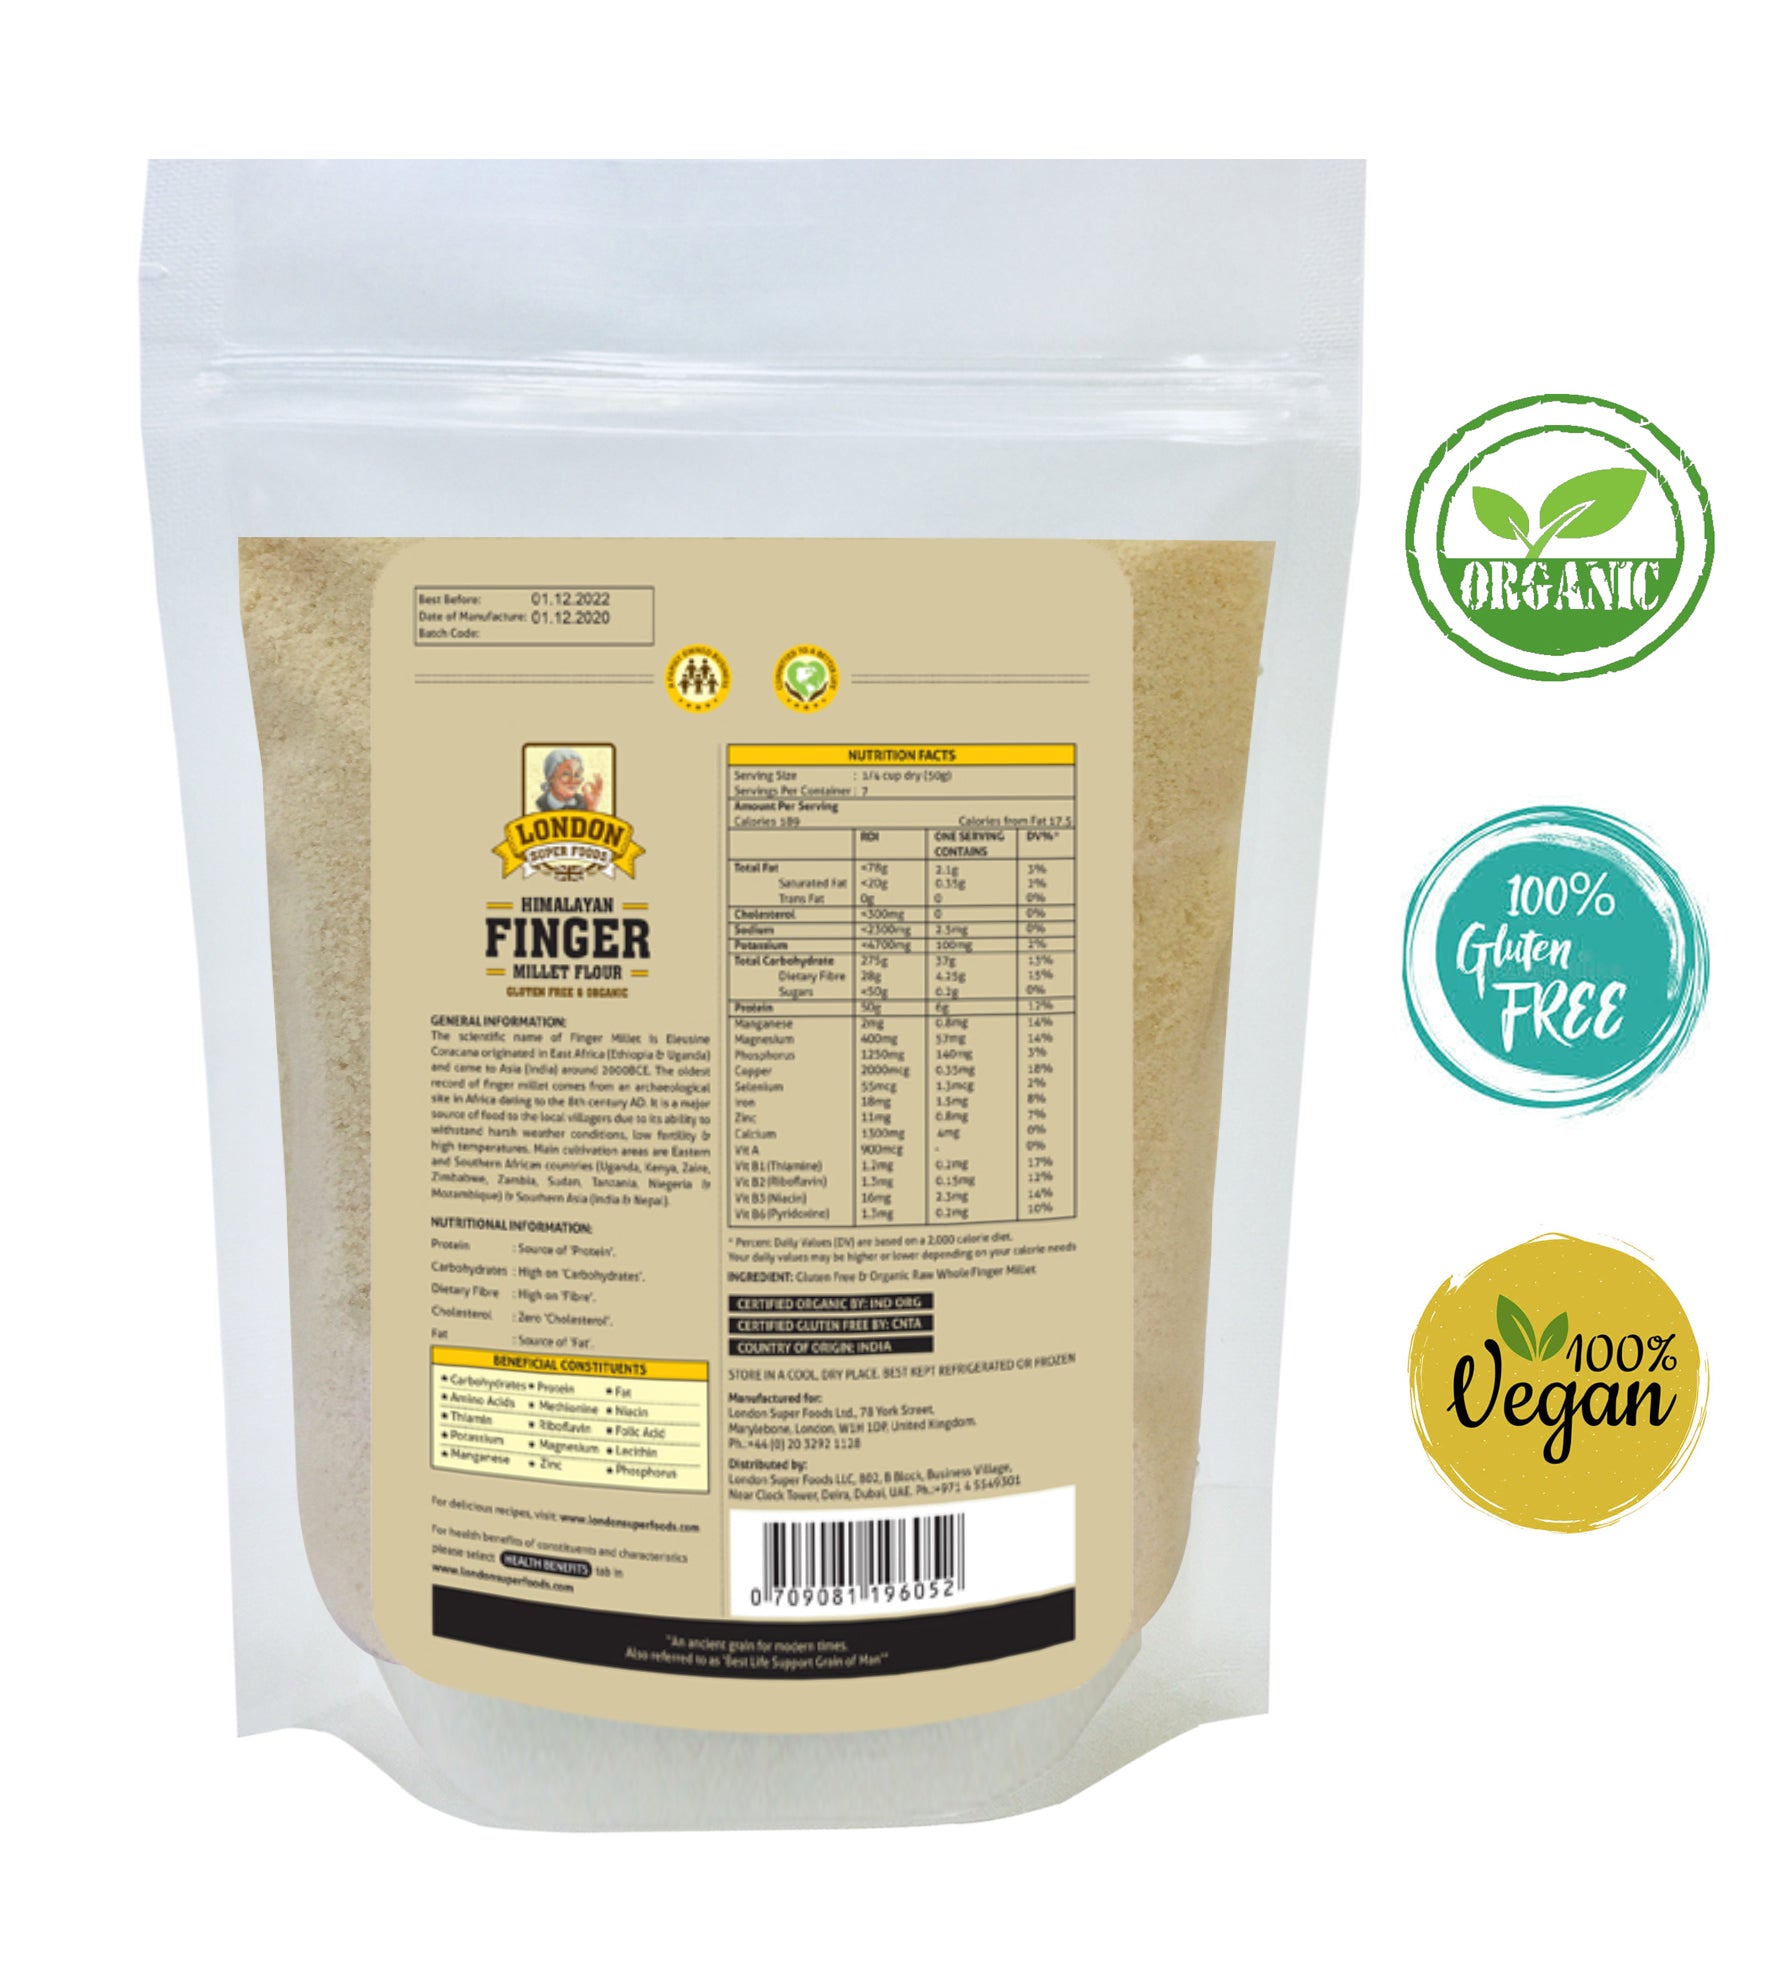 LONDON SUPER FOODS Organic Himalayan Finger Millet Flour, 350g